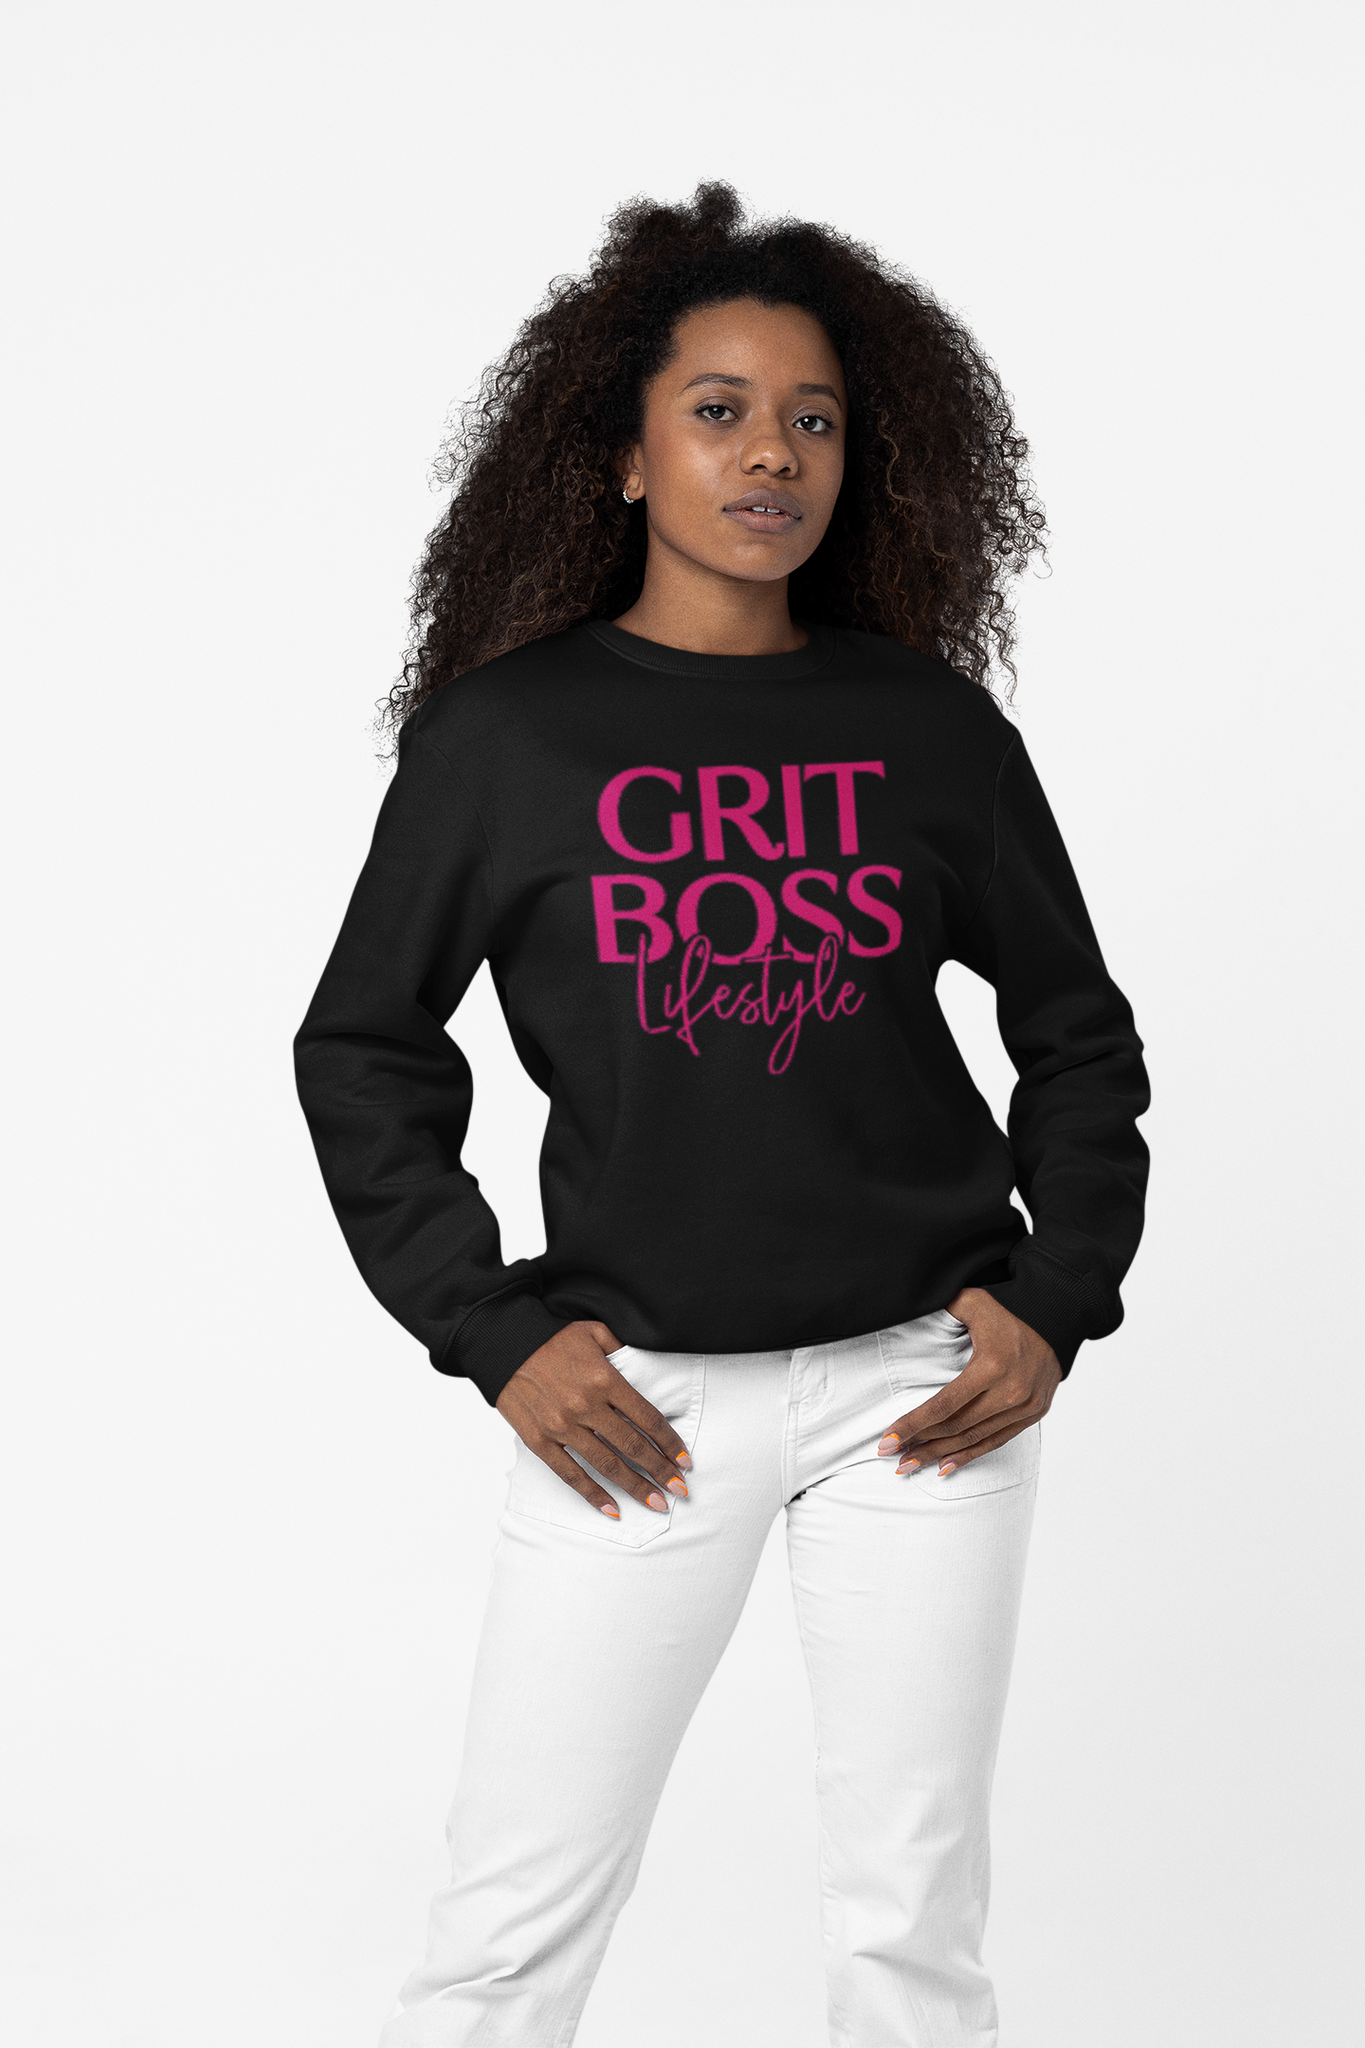 A black woman wearing a black crewneck sweatshirt